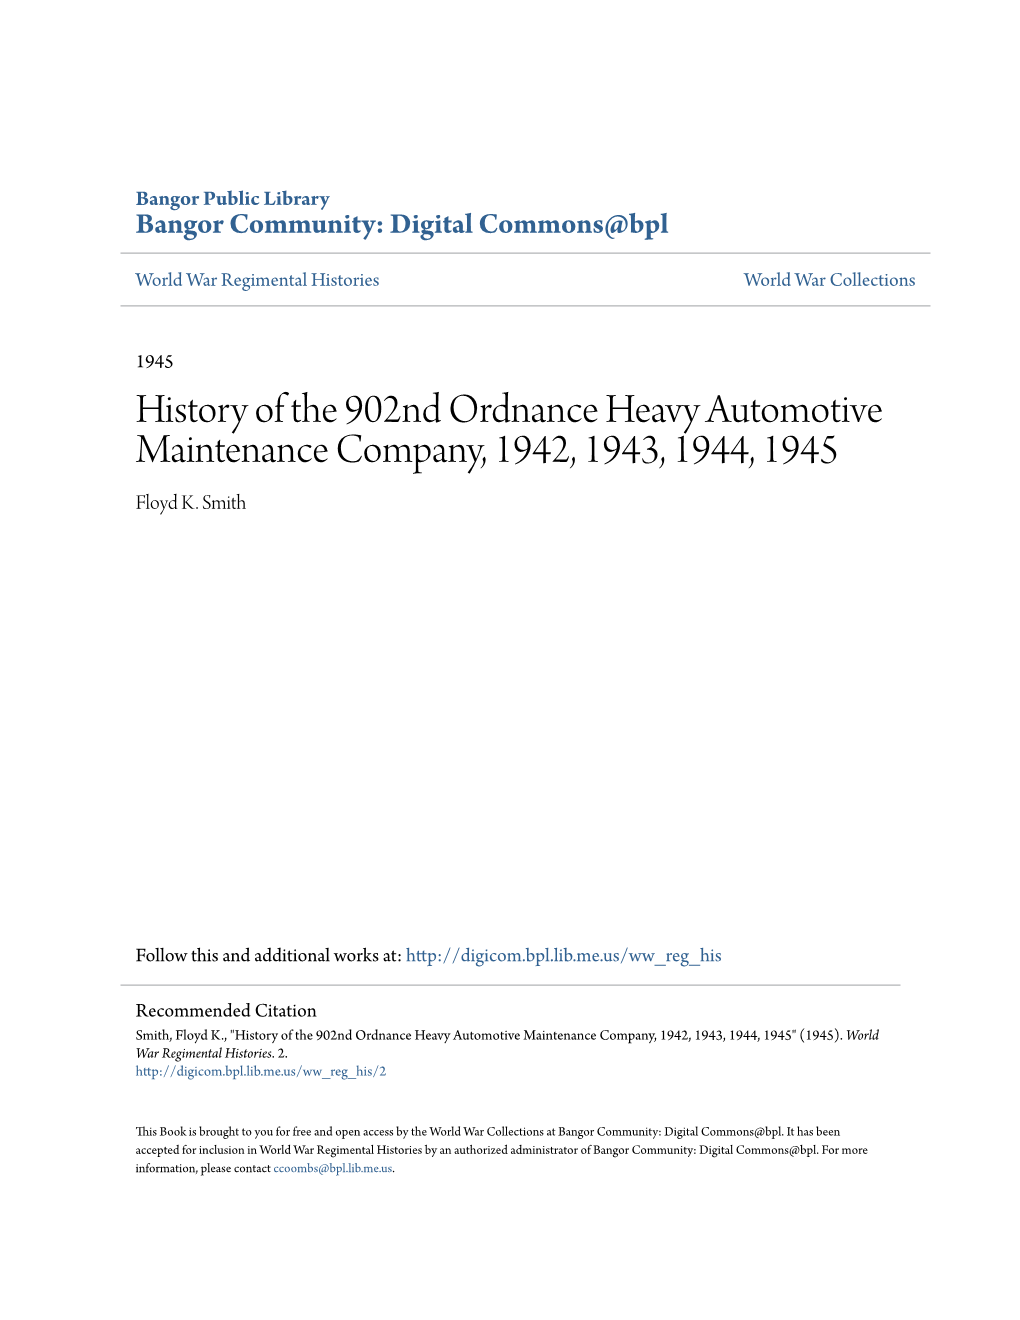 History of the 902Nd Ordnance Heavy Automotive Maintenance Company, 1942, 1943, 1944, 1945 Floyd K